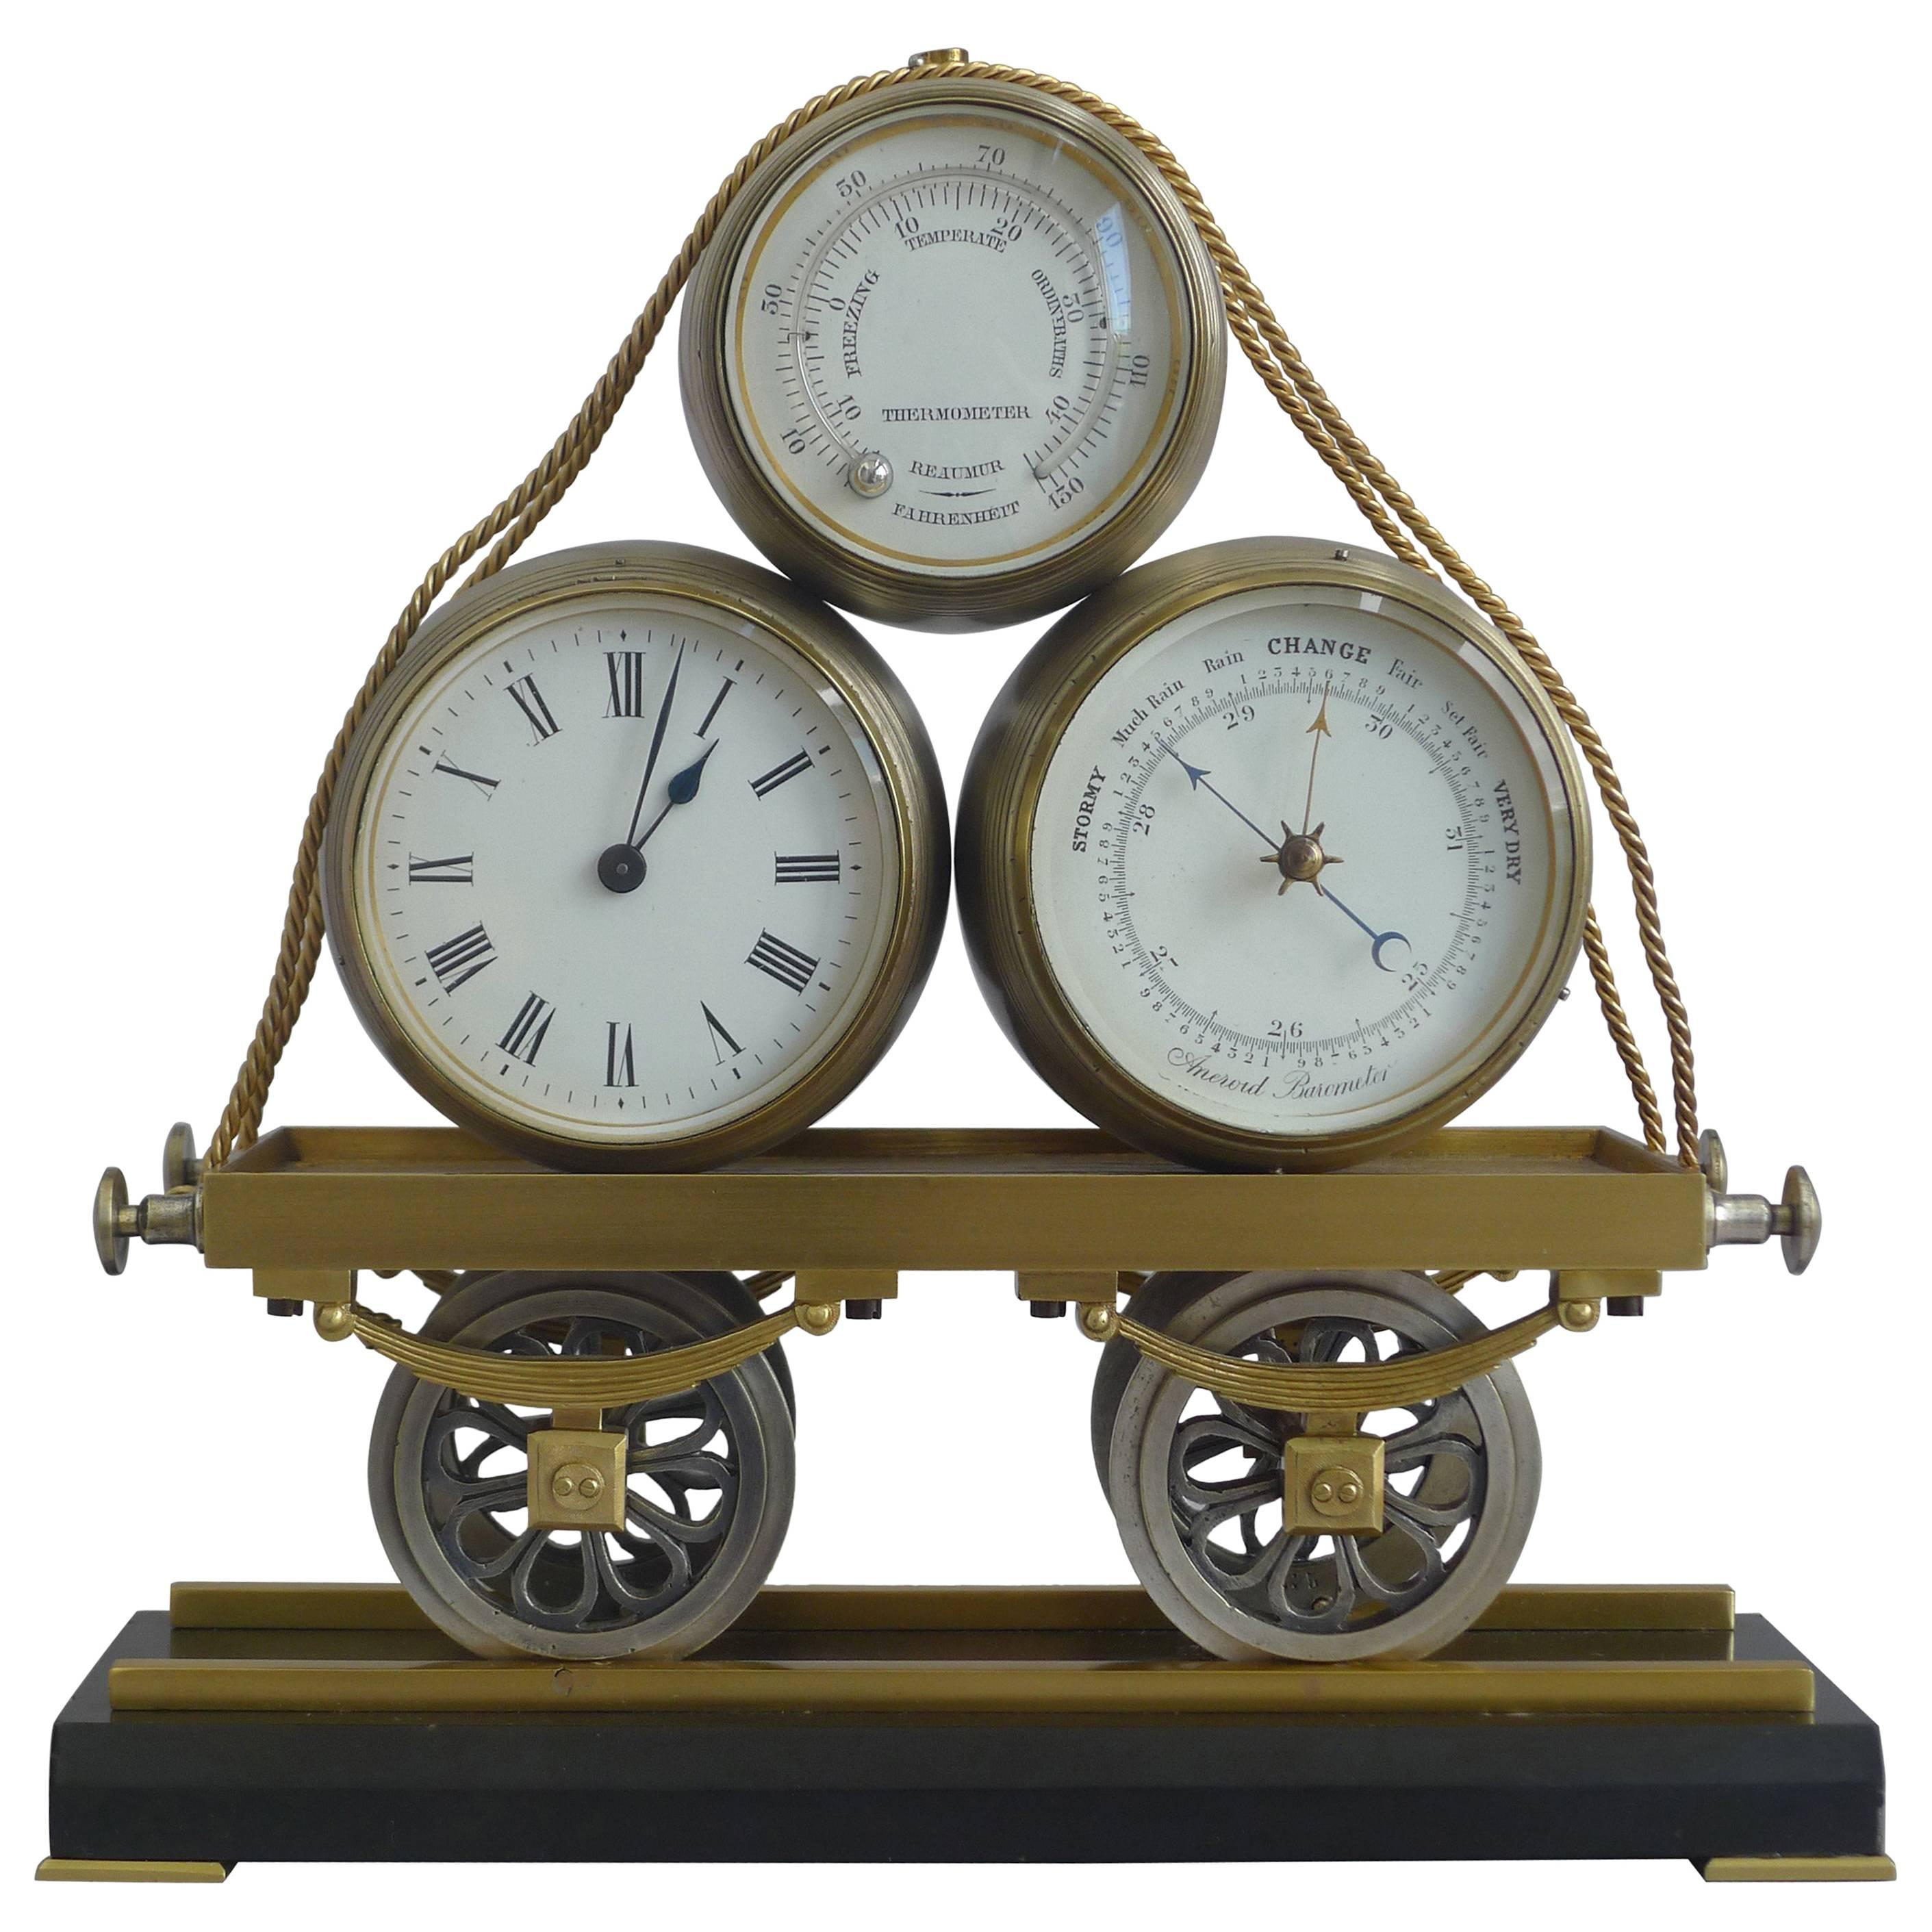 19th Century Industrial Mantel Clock Modelled as a Railway Wagon by Guilmet